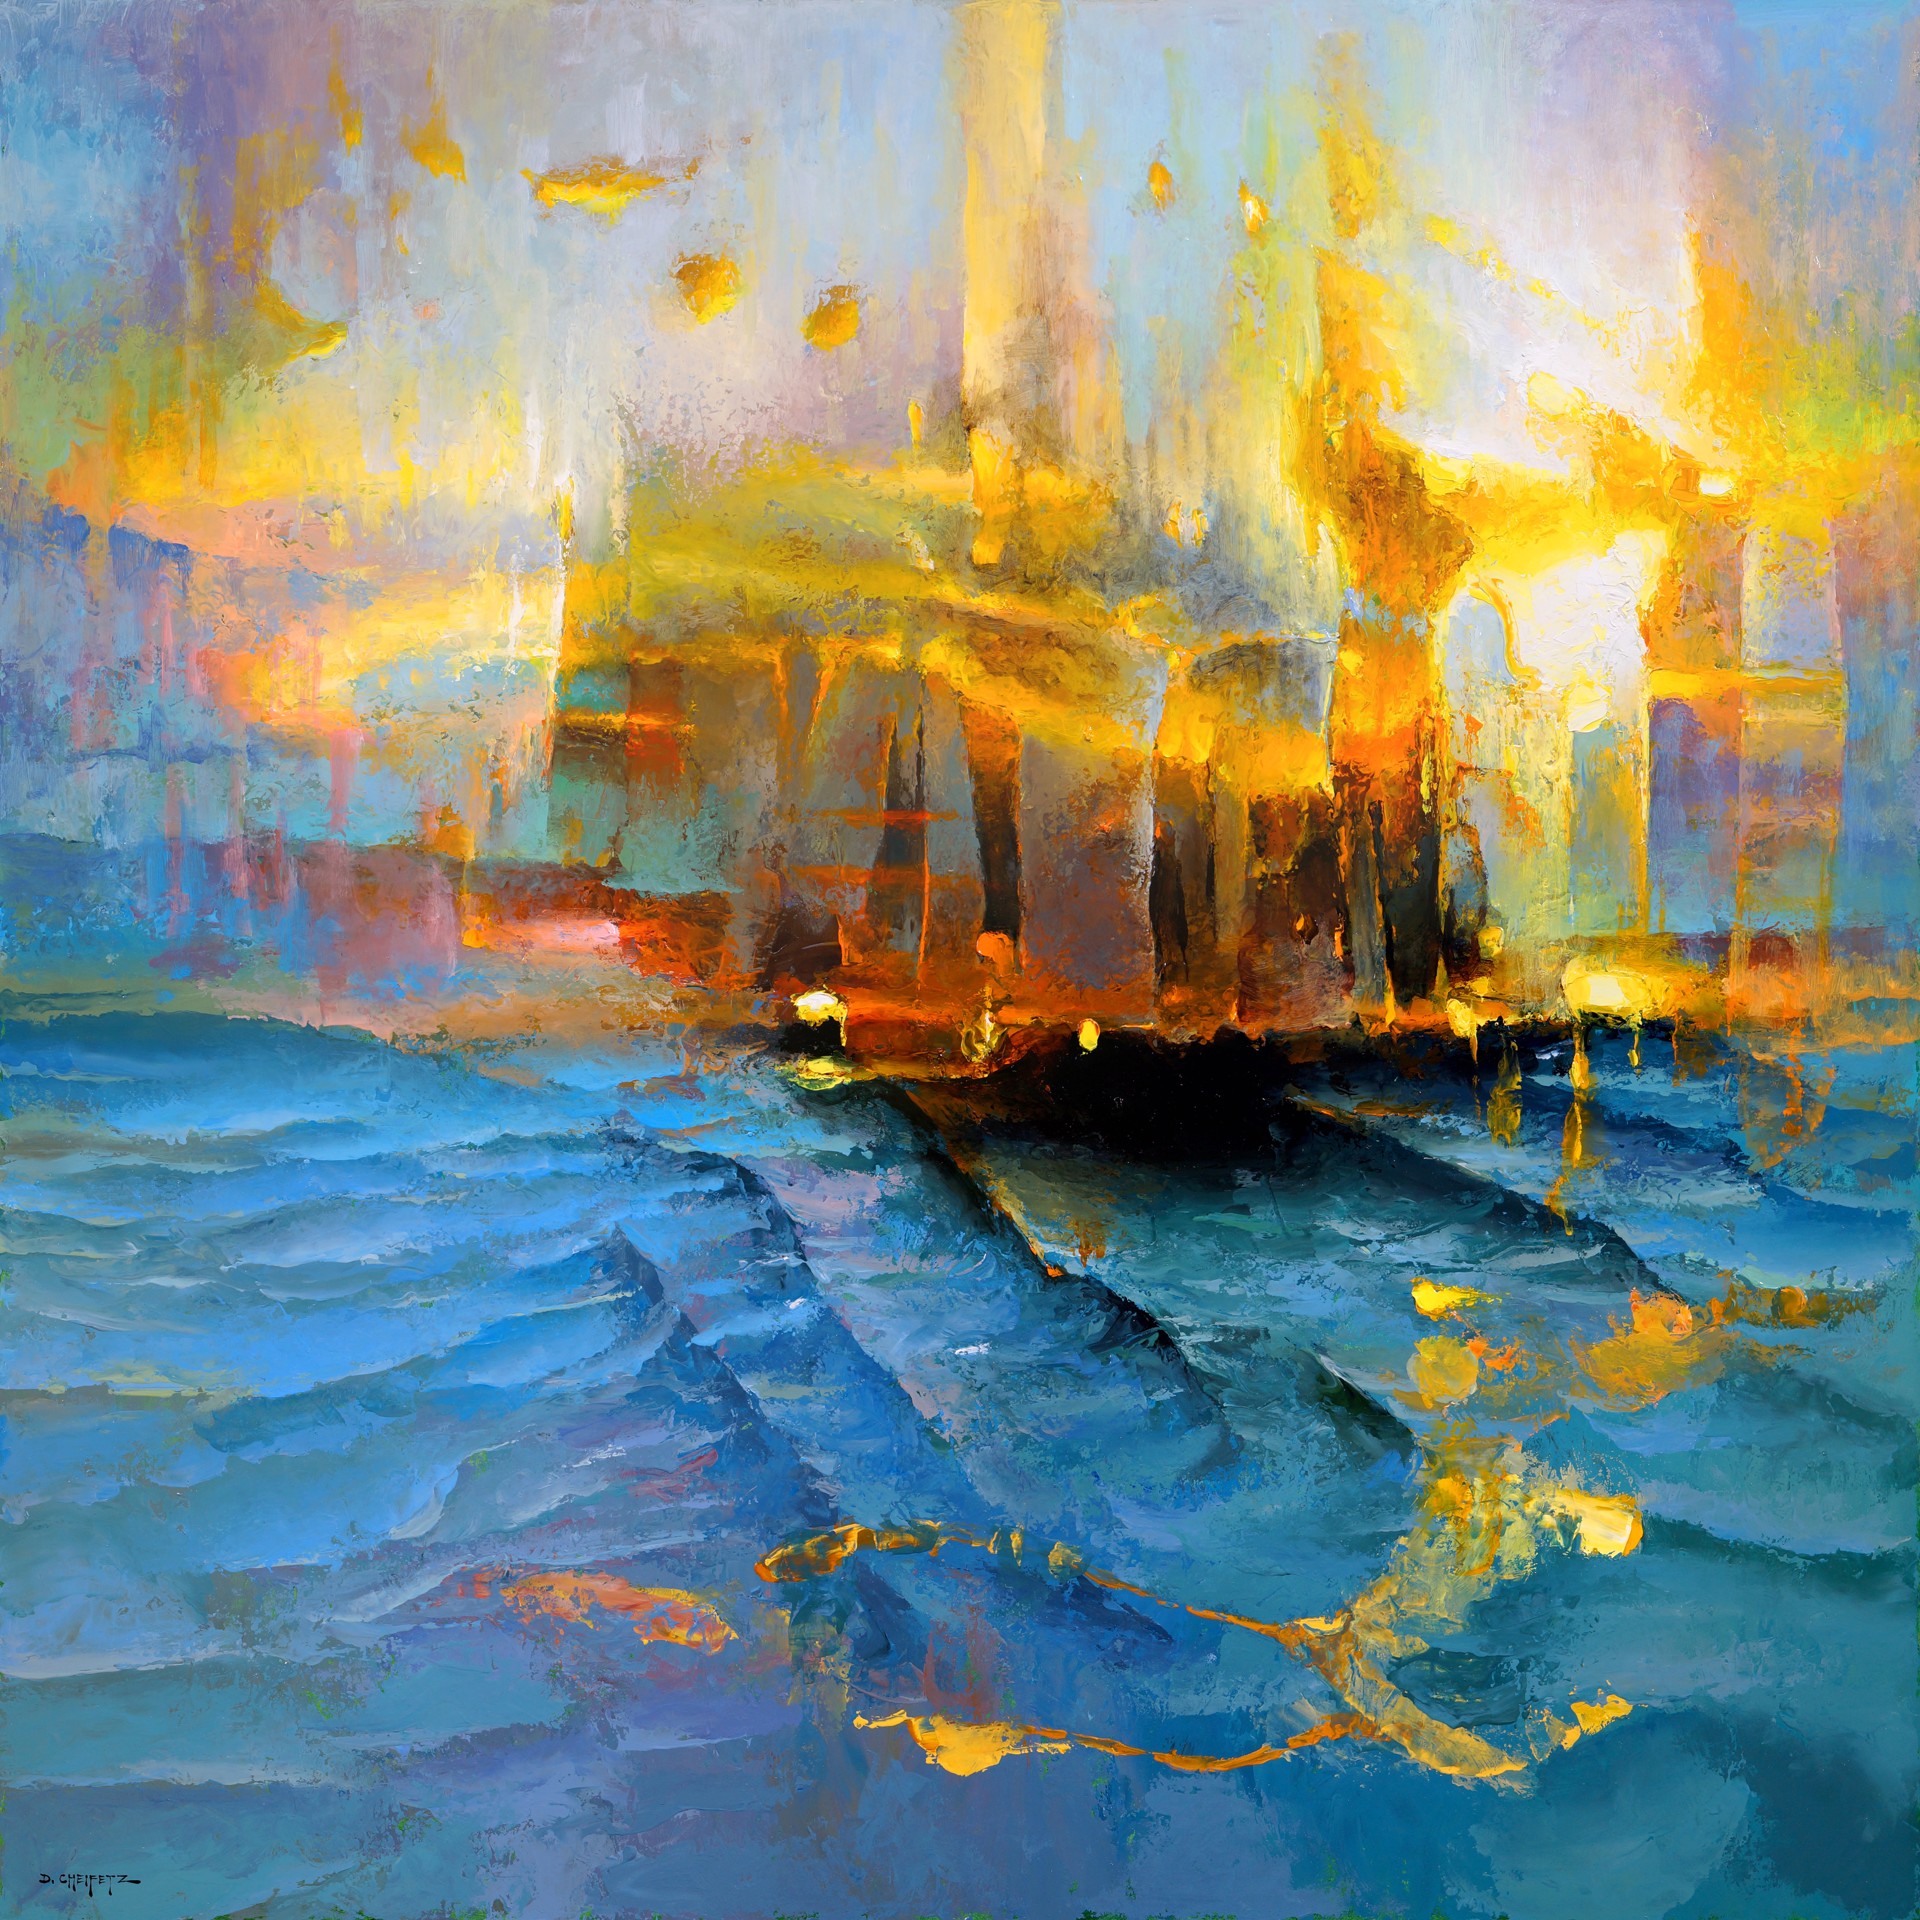 On The Burning Sea by David Cheifetz